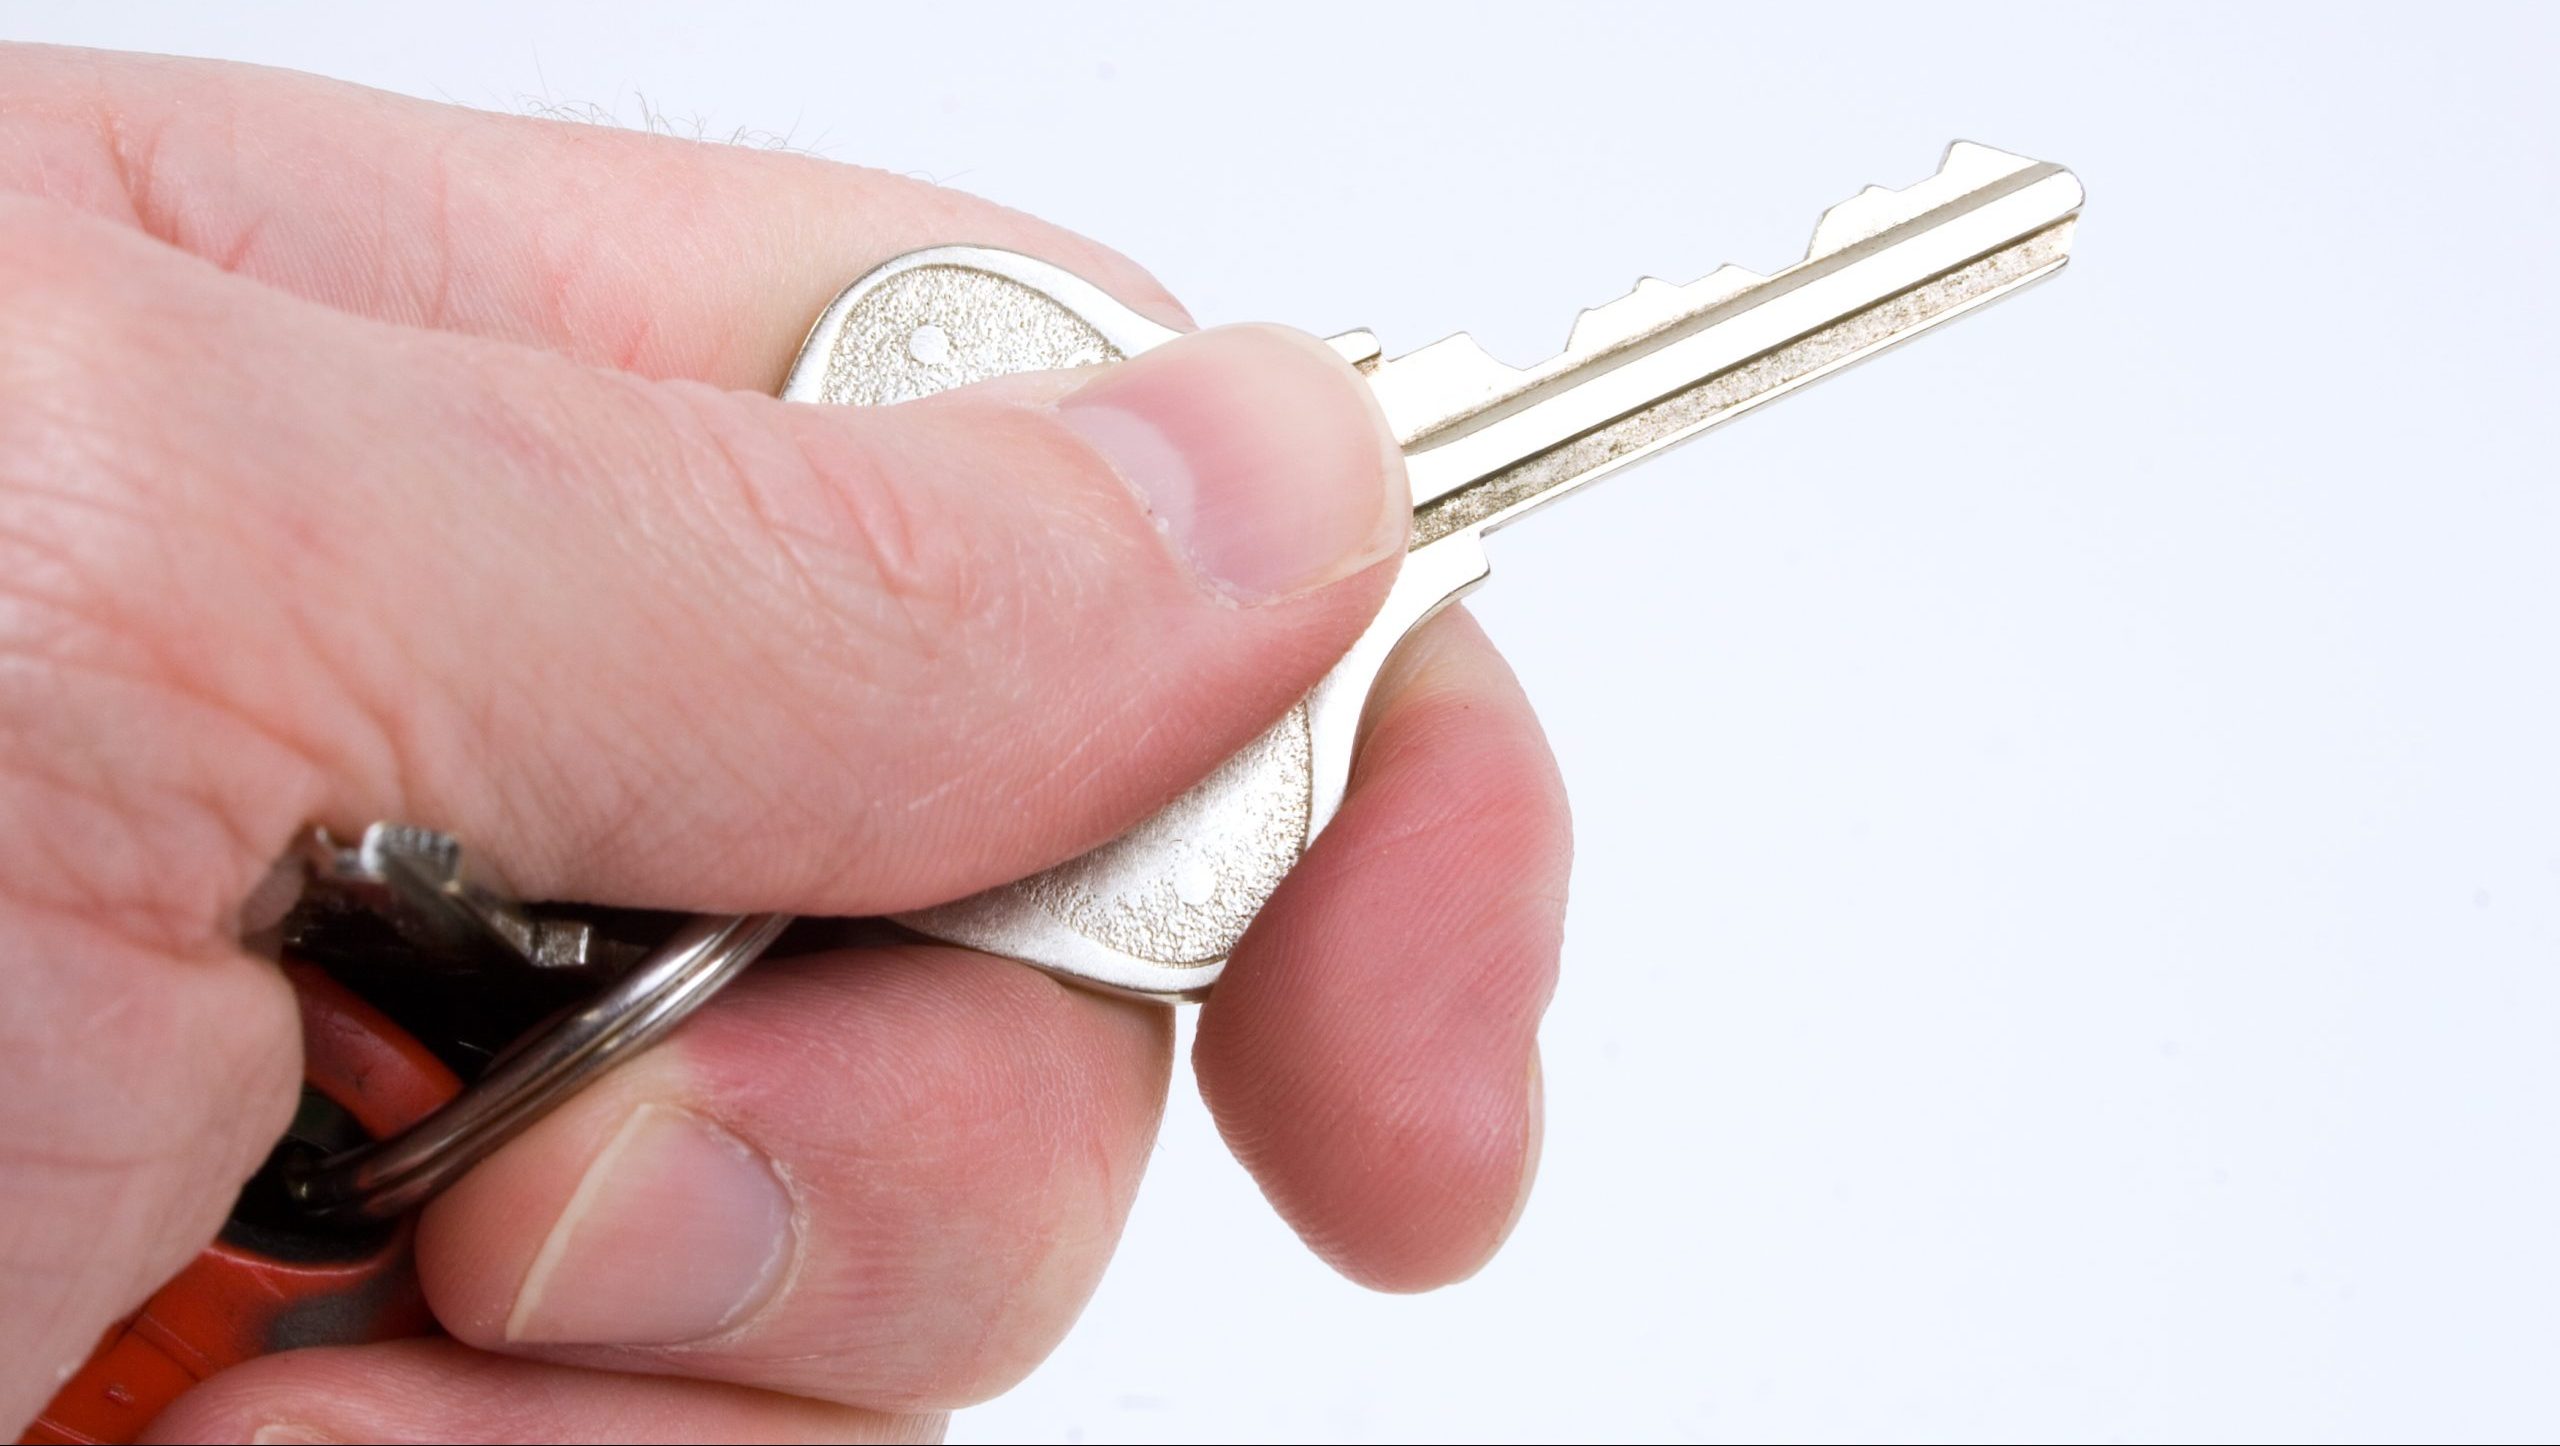 A hand holding a key